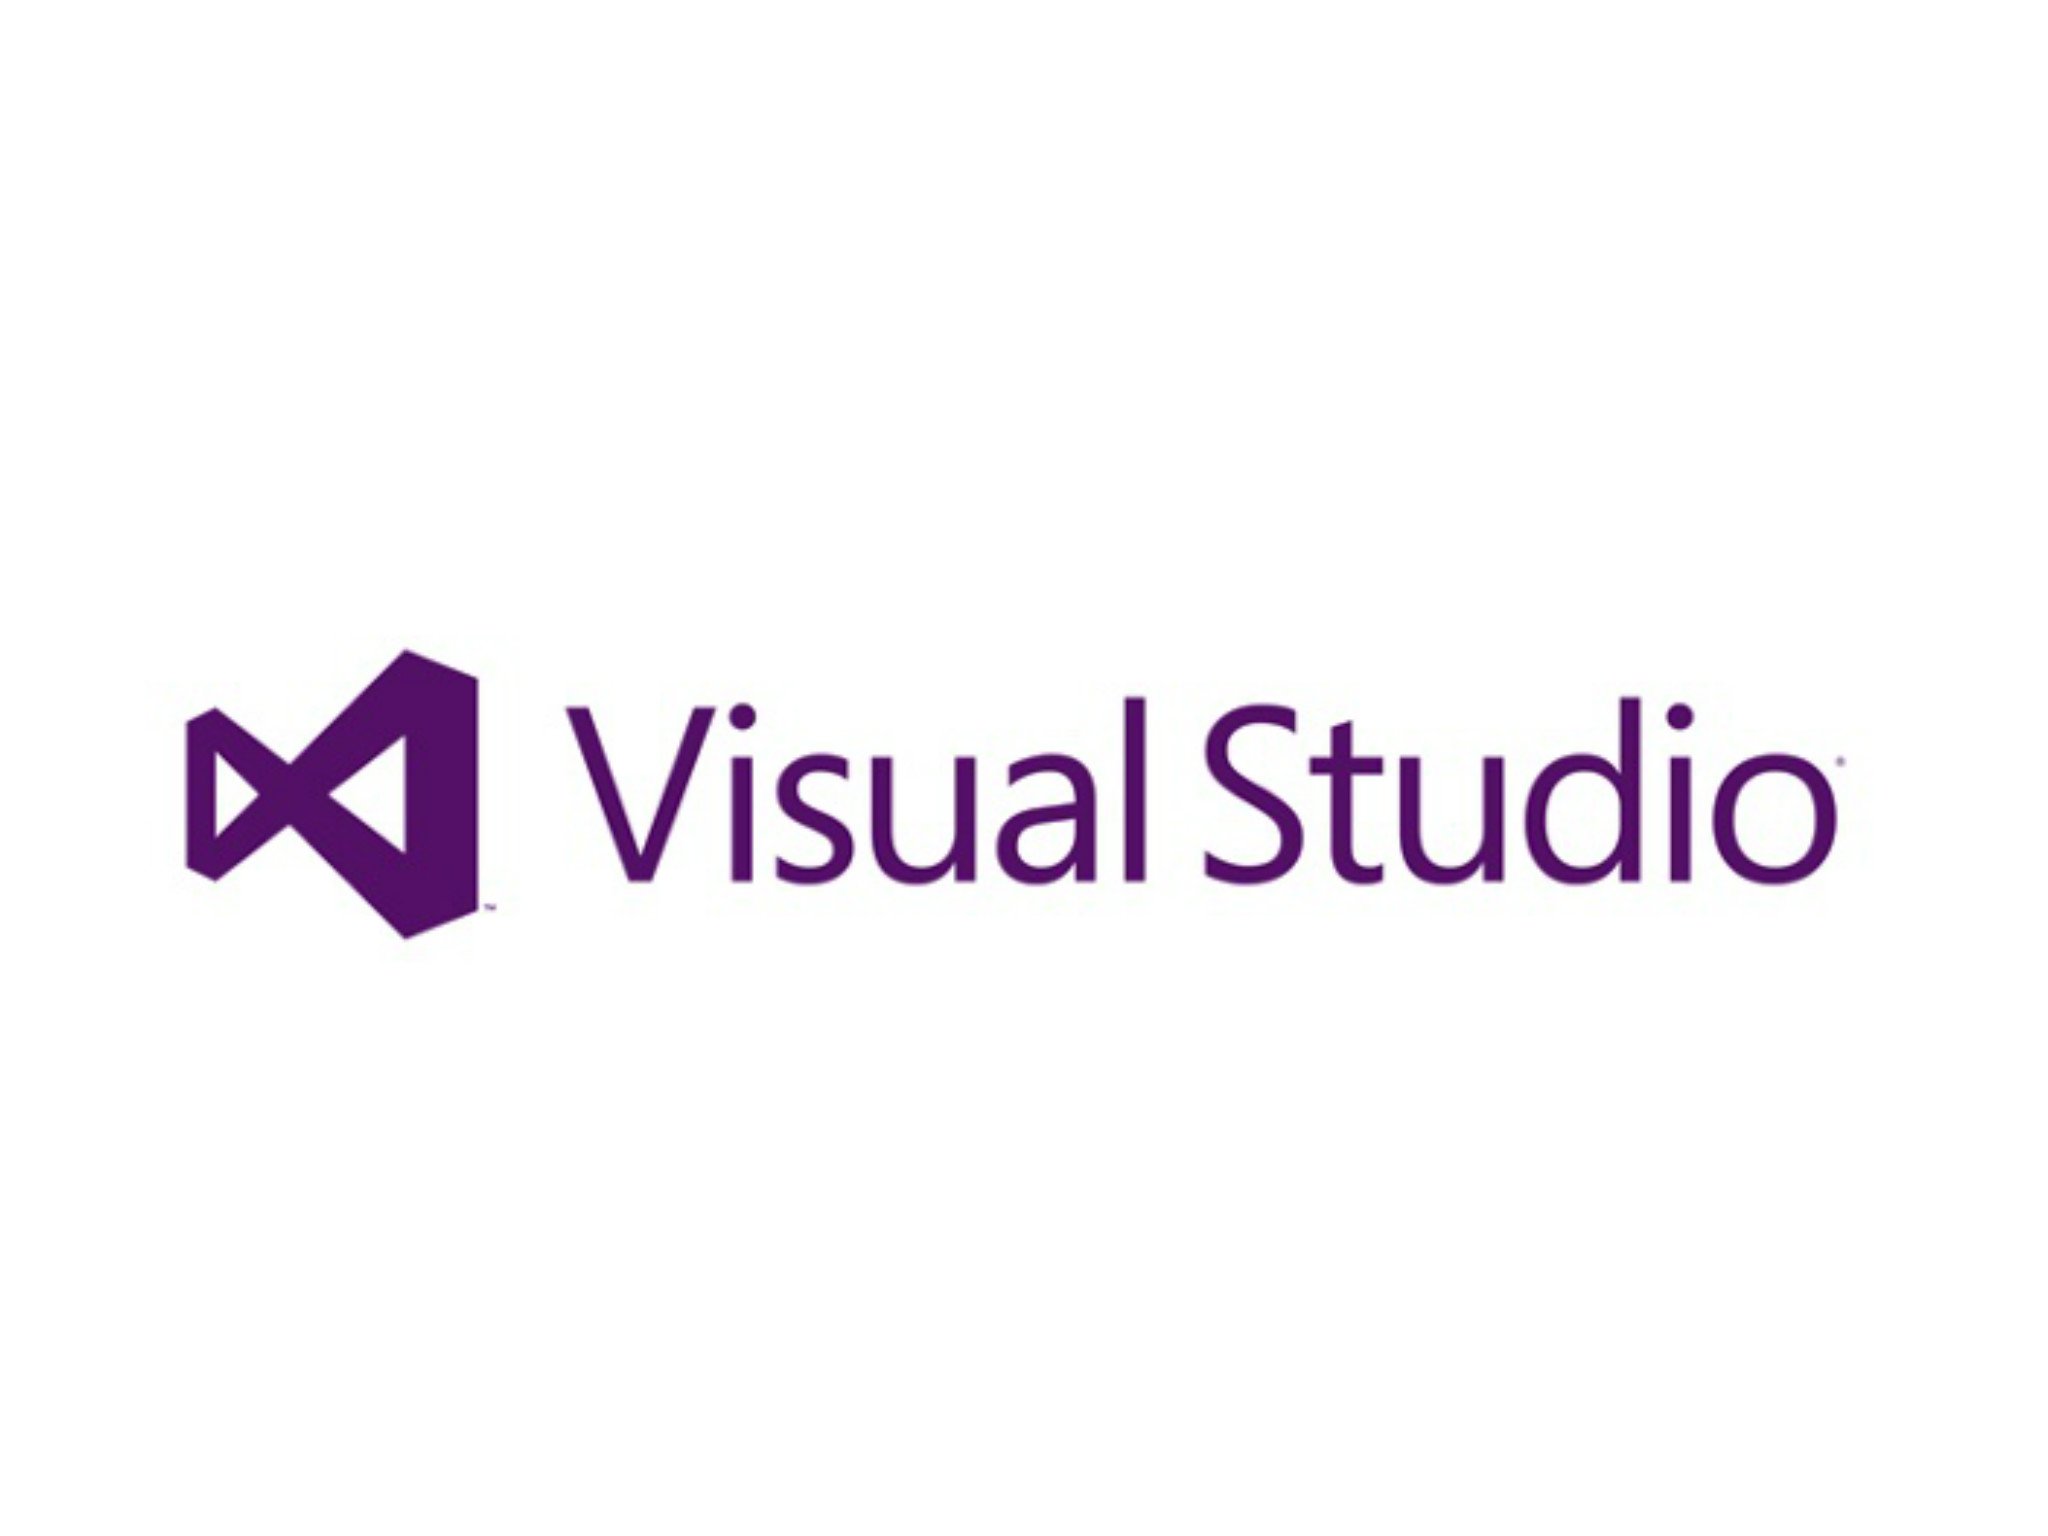 Visual Studio 2019 is the next major version of Microsoft's developer tool  | Windows Central